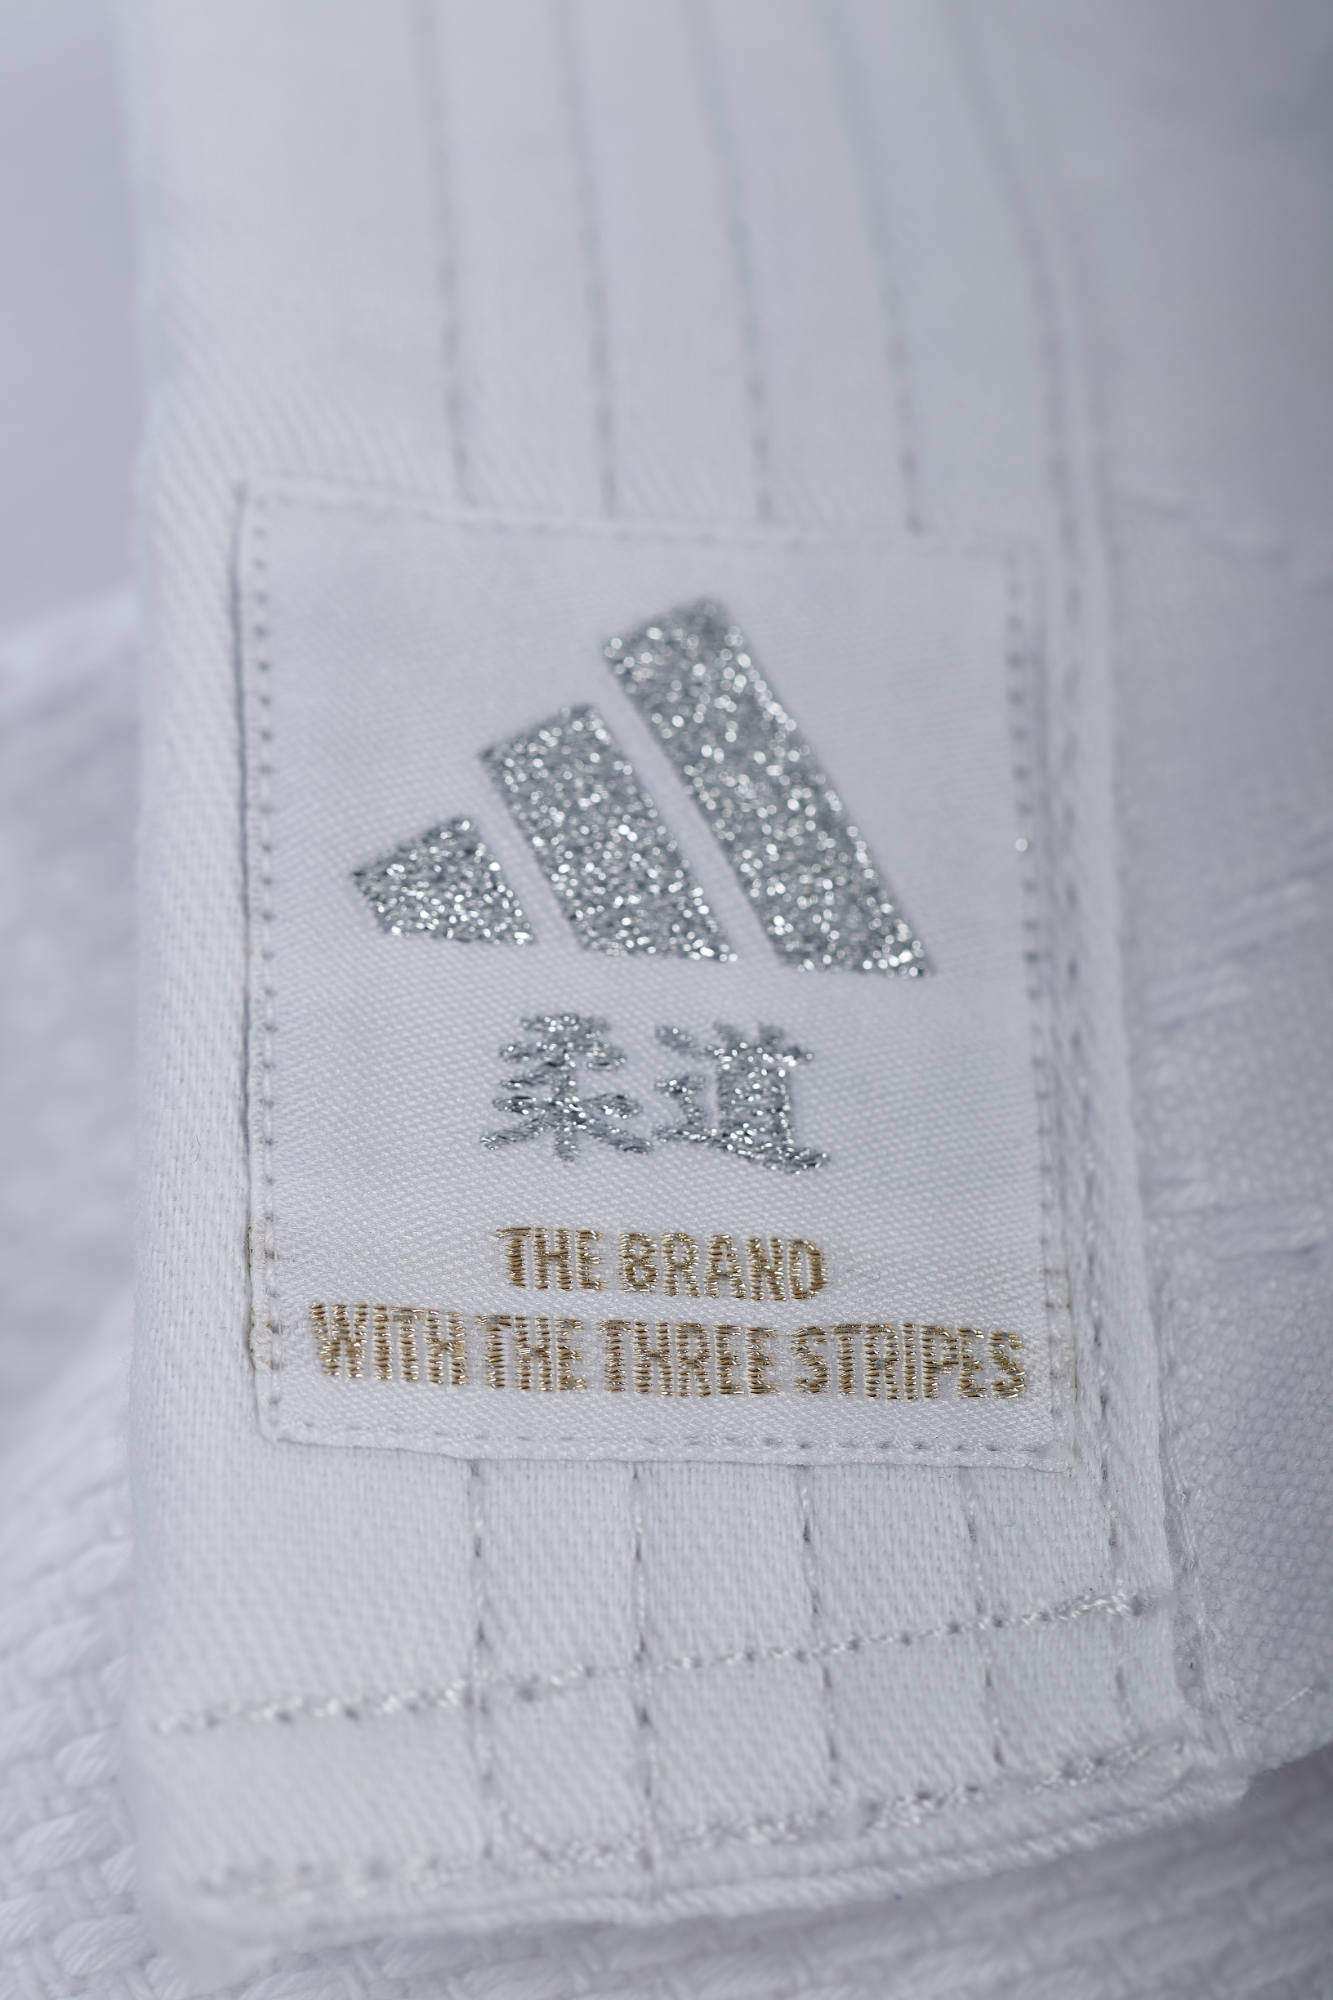 adidas judo gi Contest J650 white/silver stripes